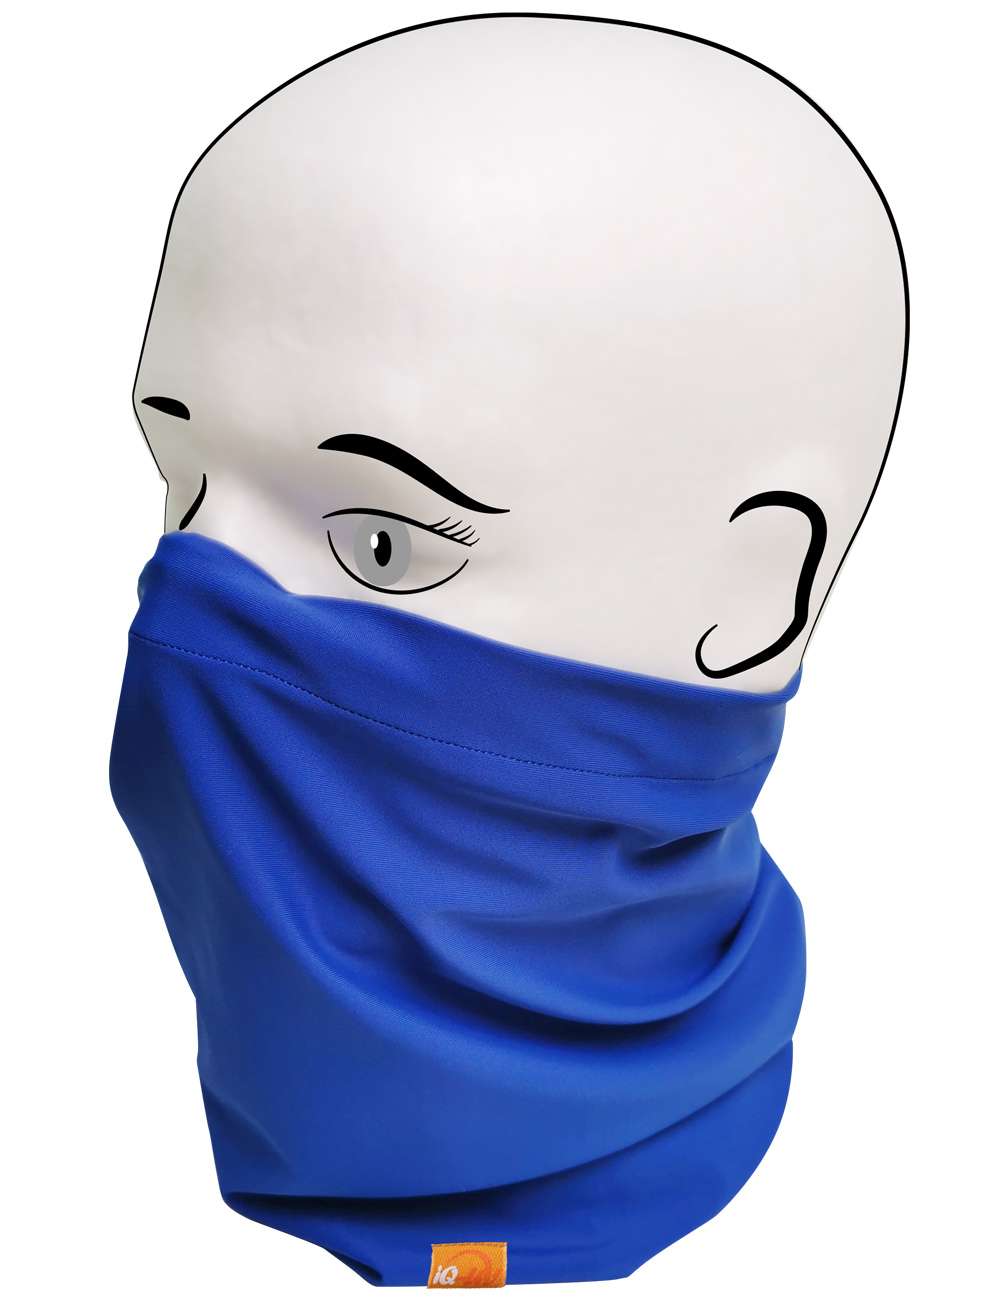 Tube Community Maske blau über die Nase Mannequin